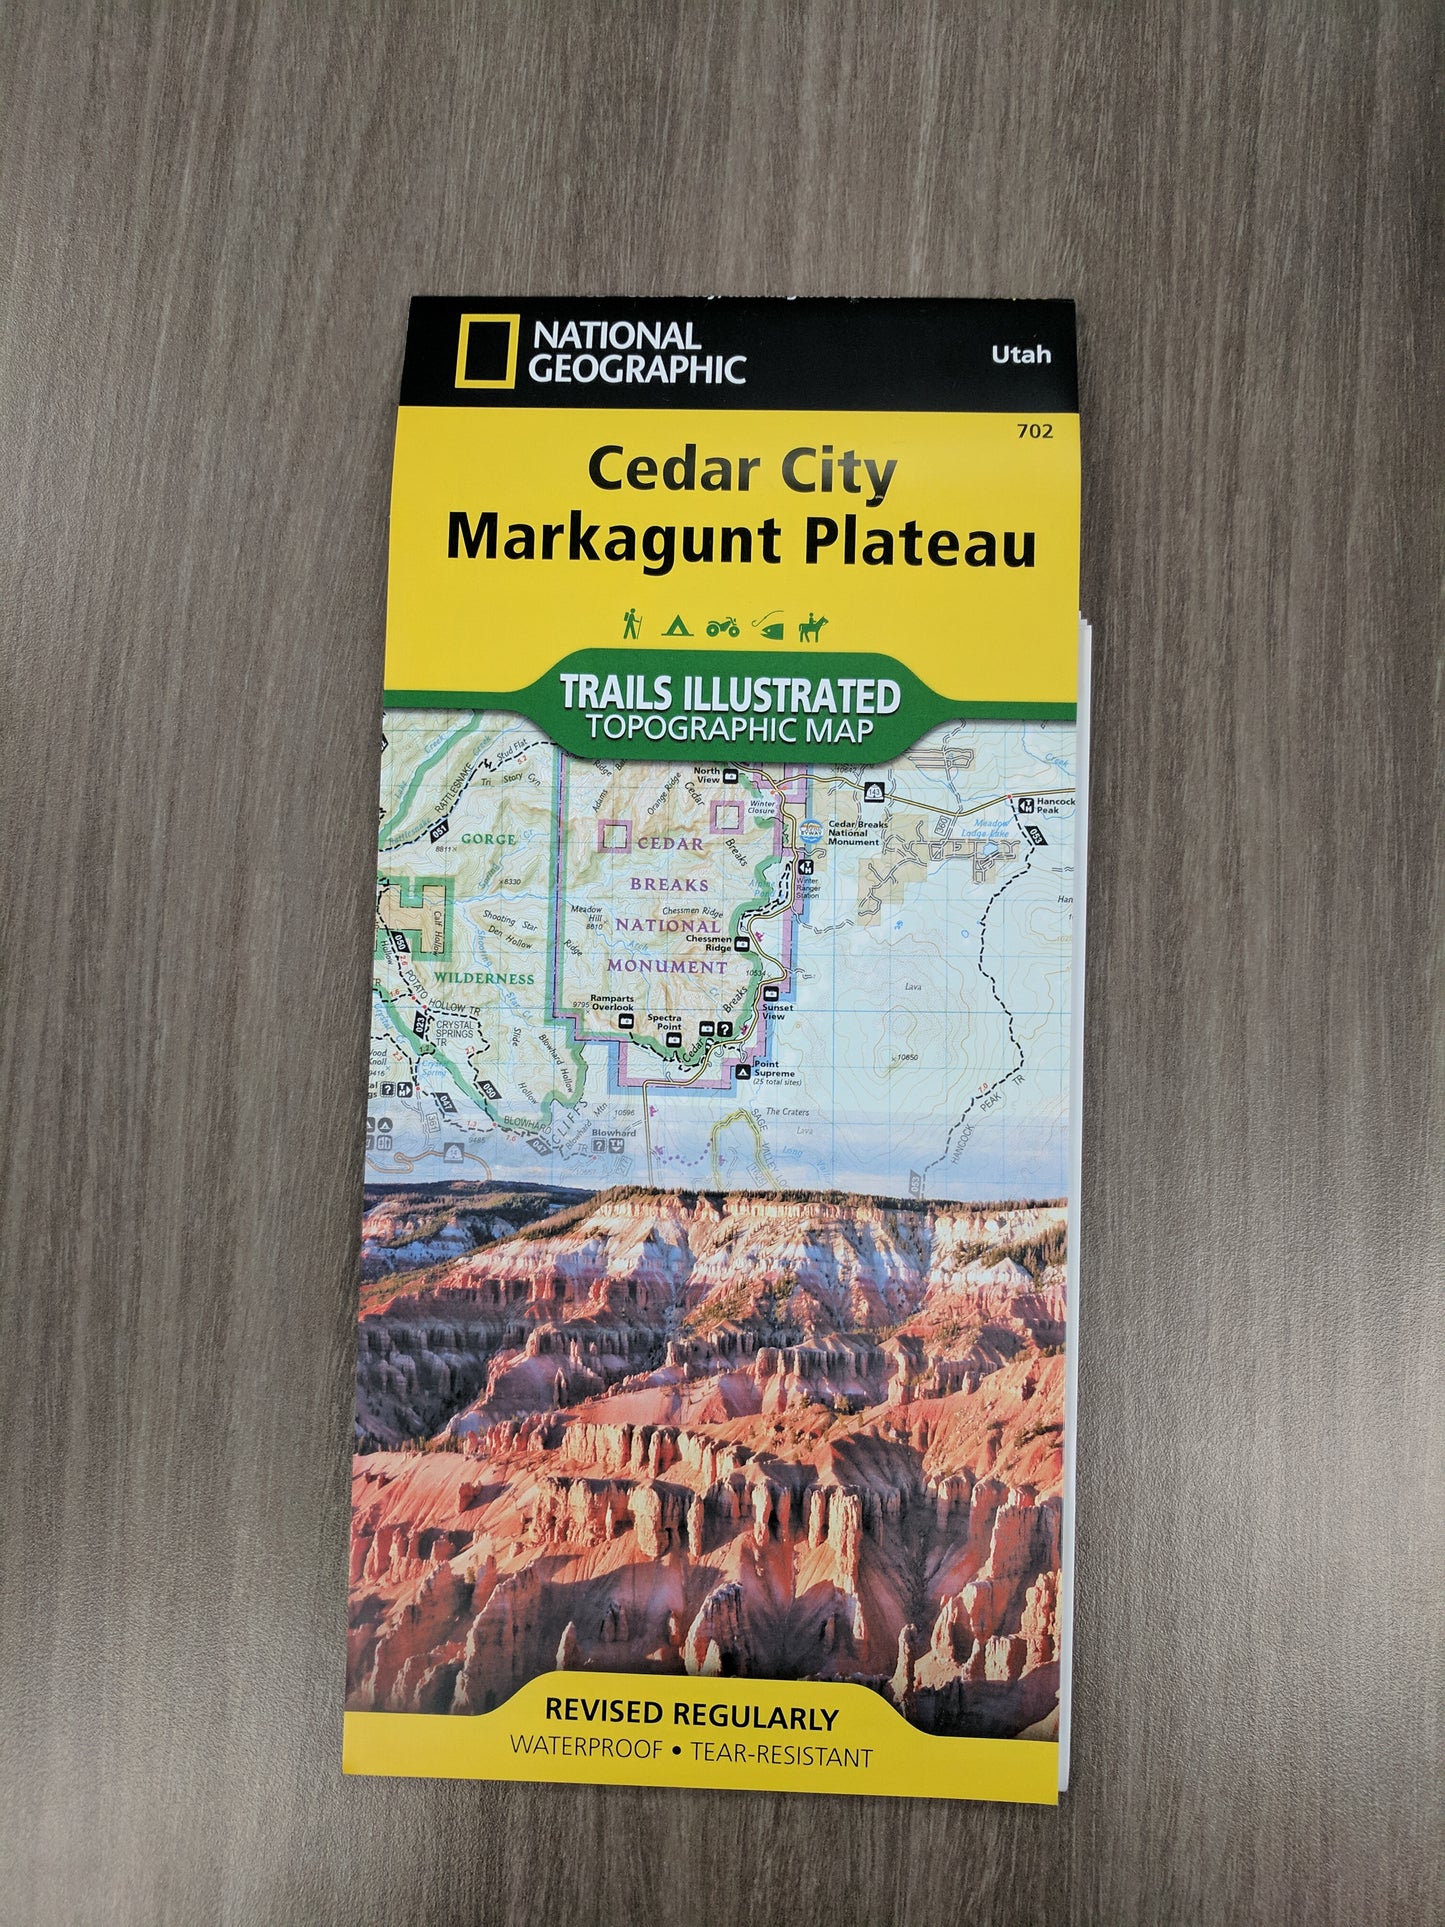 Cedar City Markagunt Plateau | Utah.com Merchandise